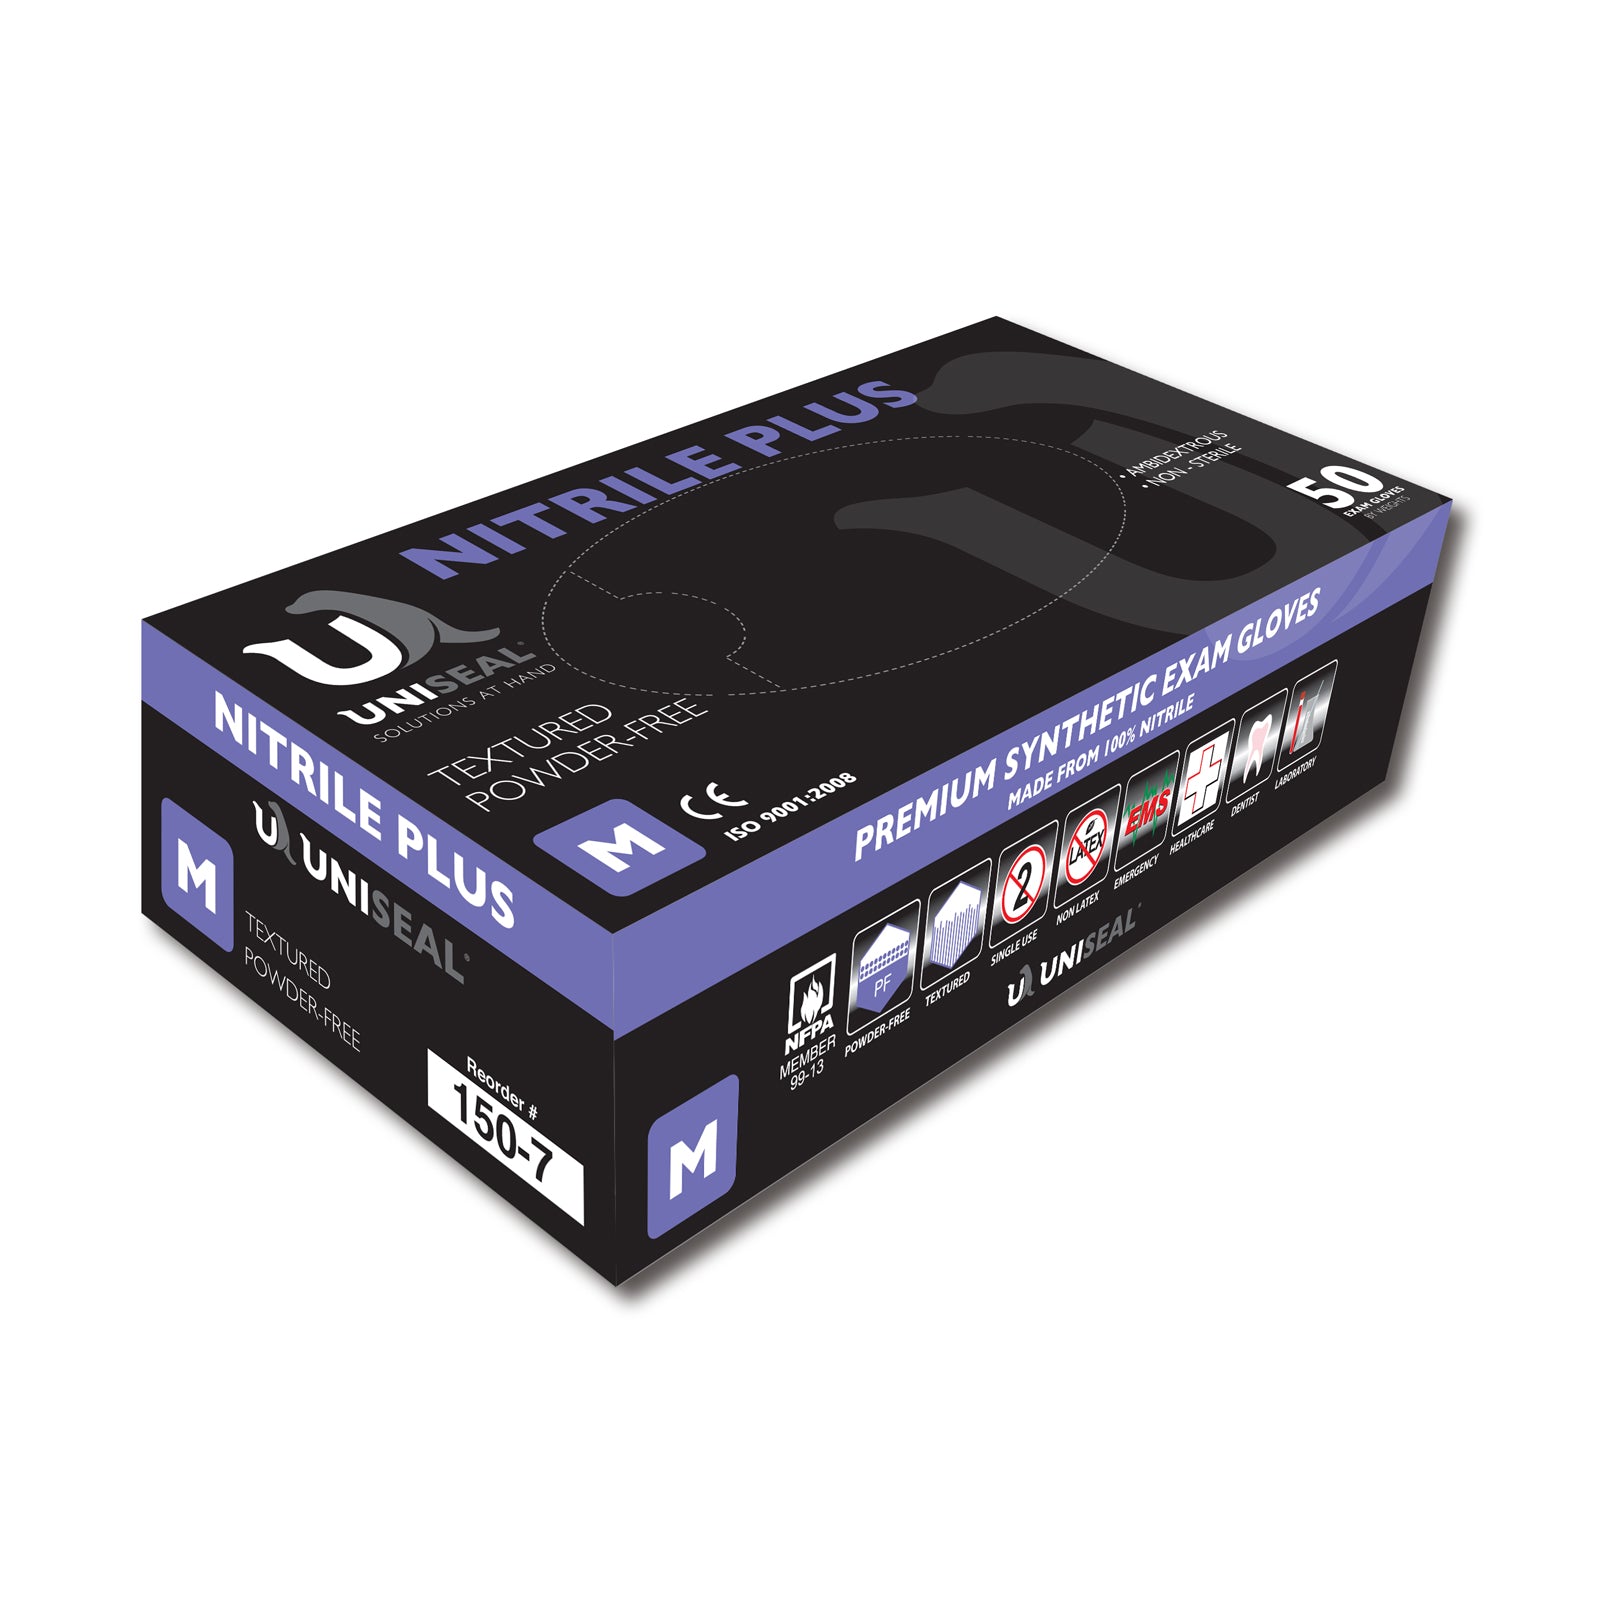 Uniseal-Nitrile Exam Gloves - Nitrile Plus Powder-Free (CASE)-eSafety Supplies, Inc